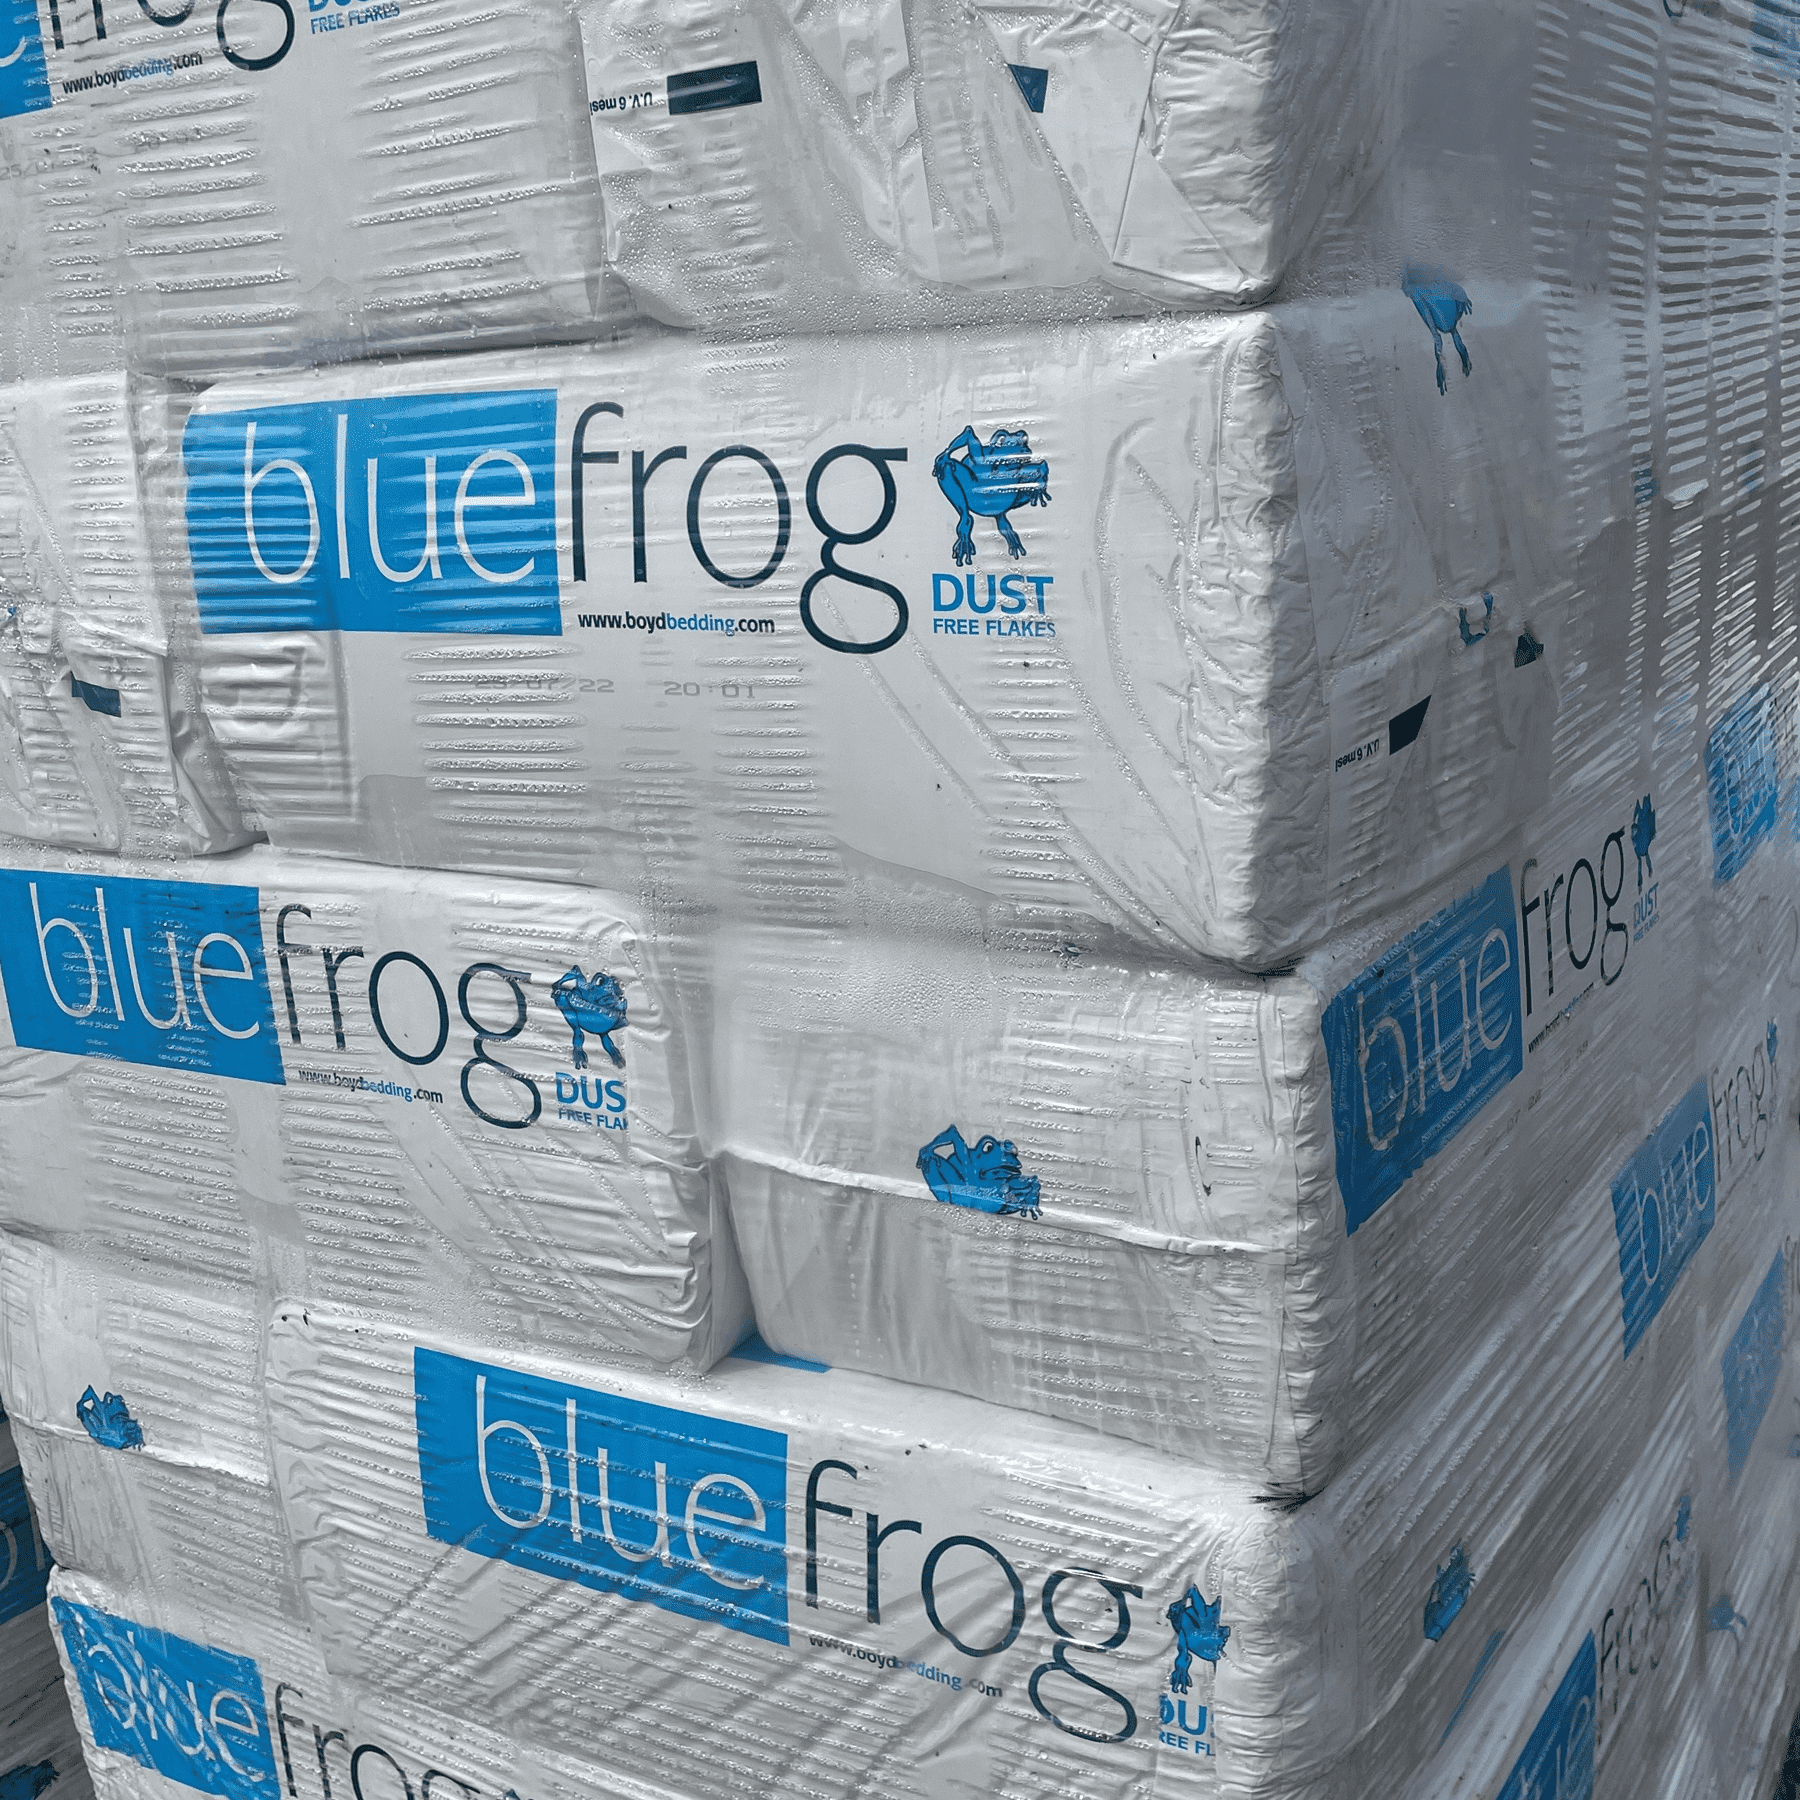 Blue Frog Quail Bedding - Bail - Crowle Quail Eggs